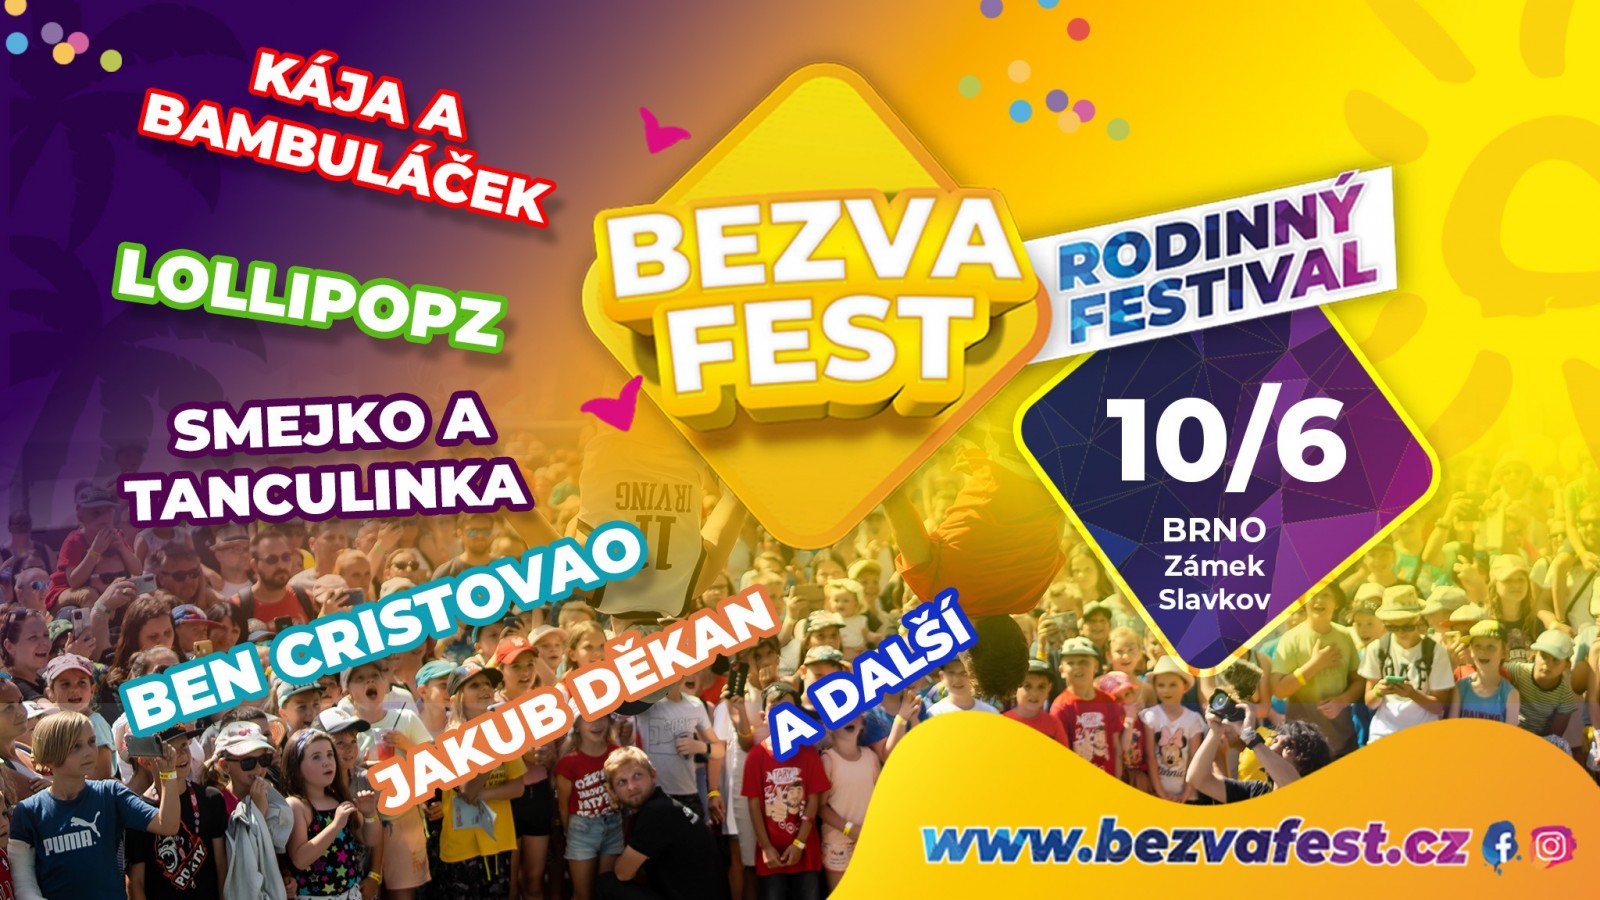 BezvaFest - rodinný festival 